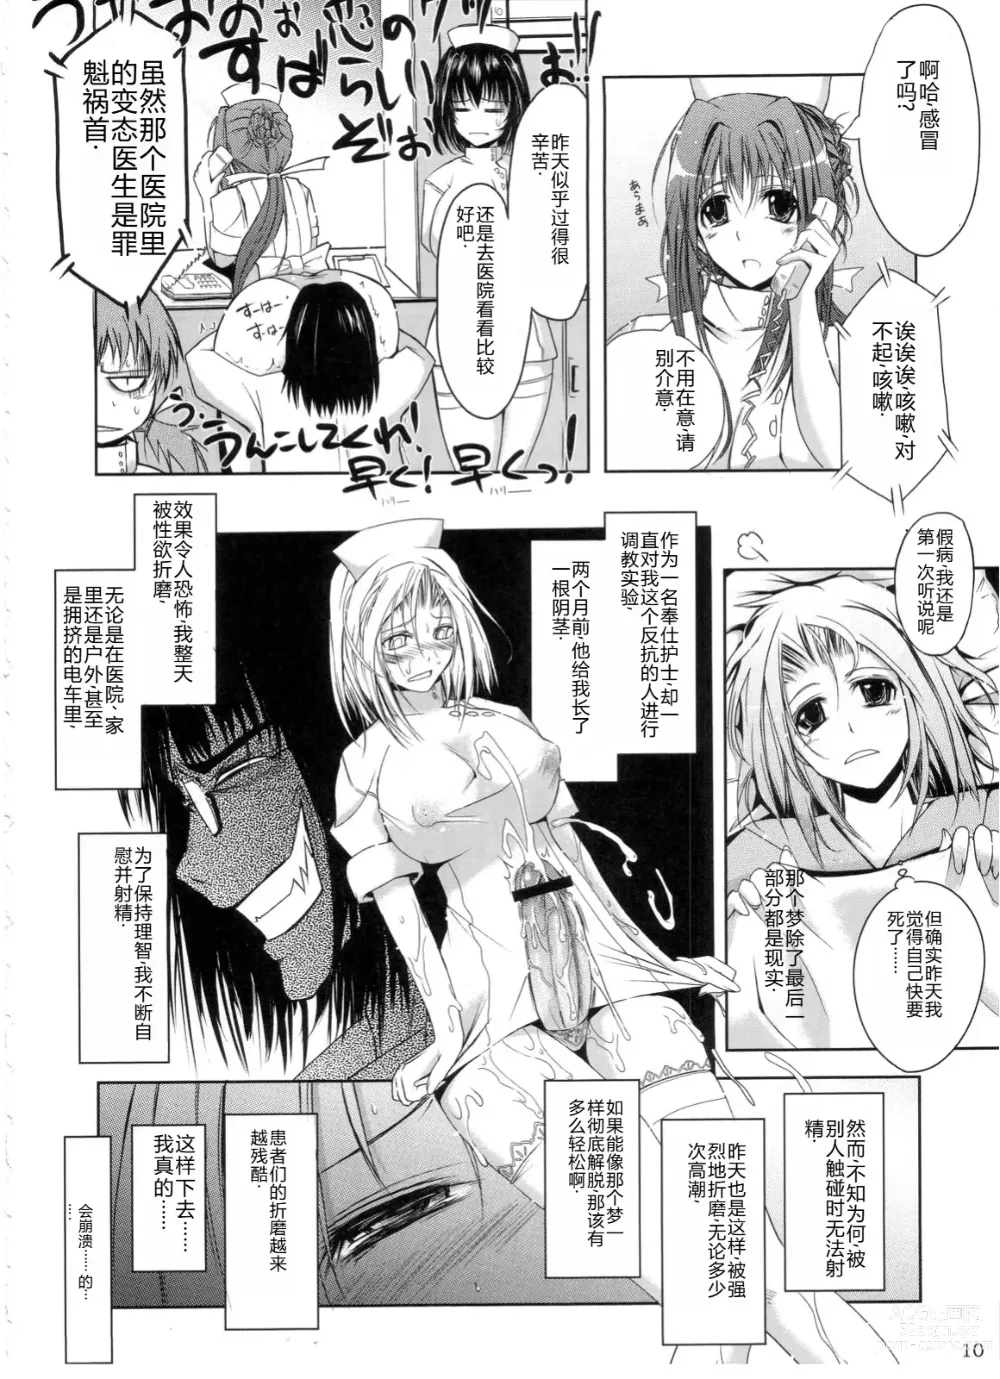 Page 9 of doujinshi Otome Byoutou